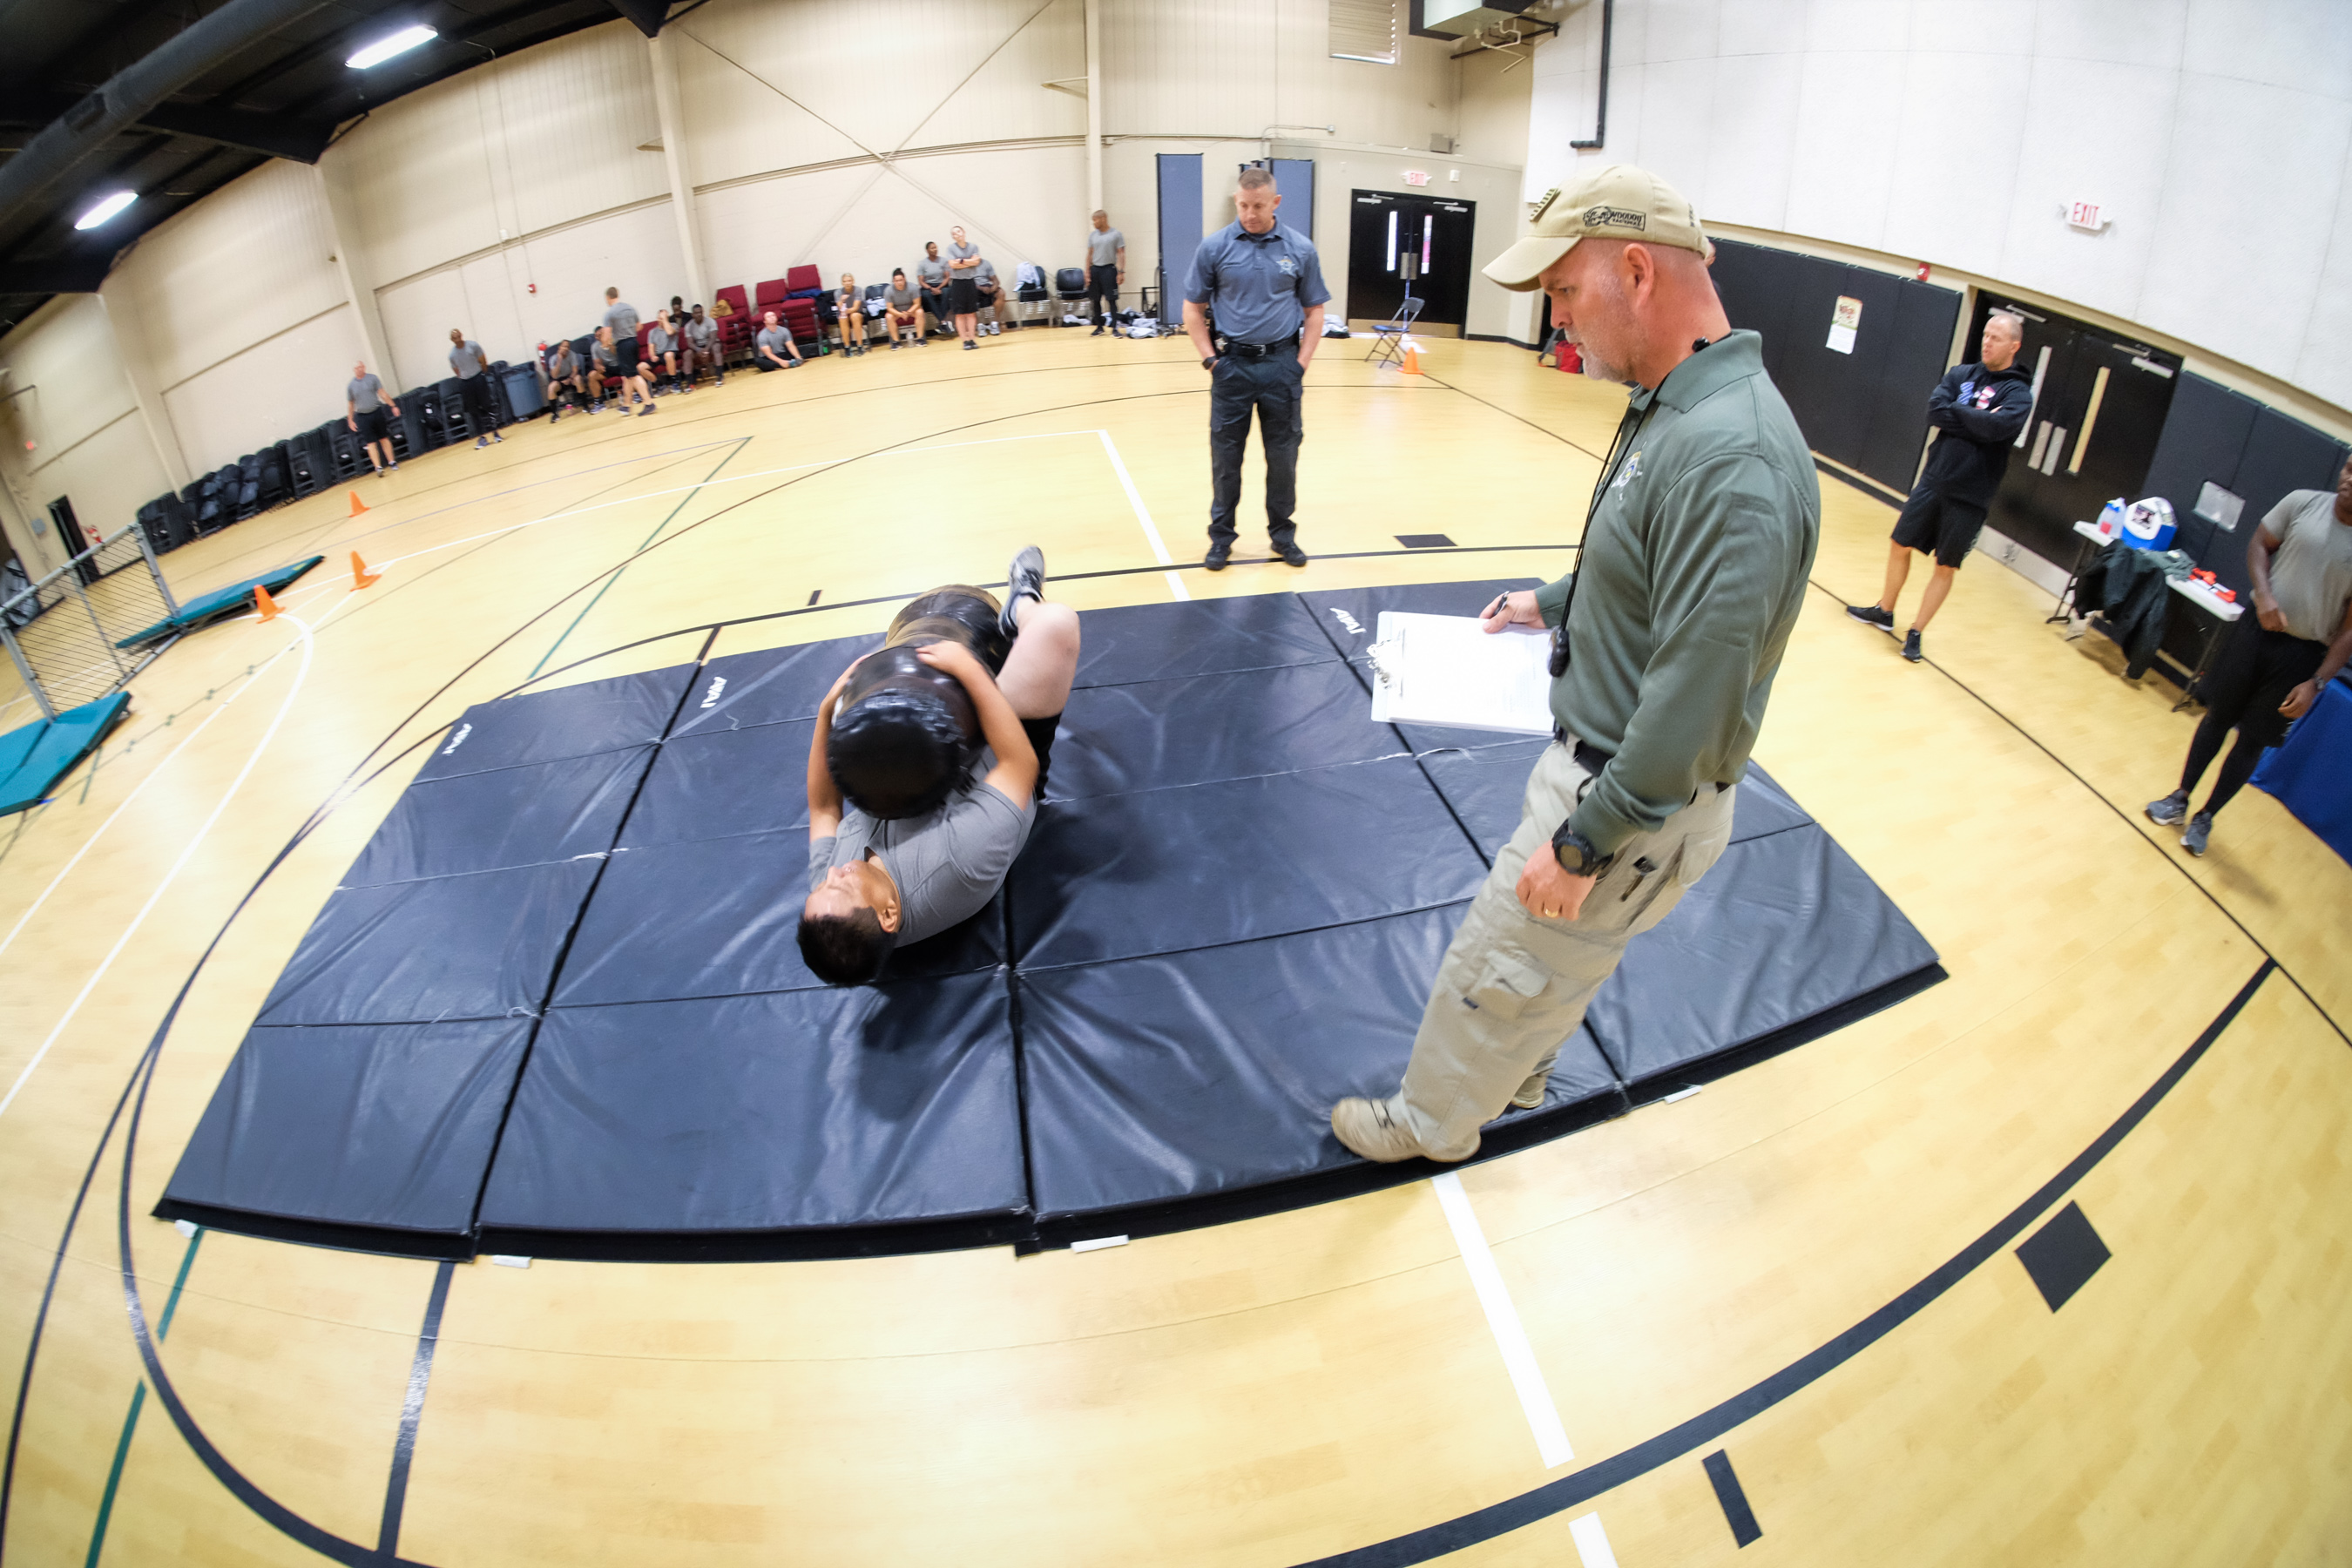 Deputy recruit rolling a heavy bag on a mat in a gym